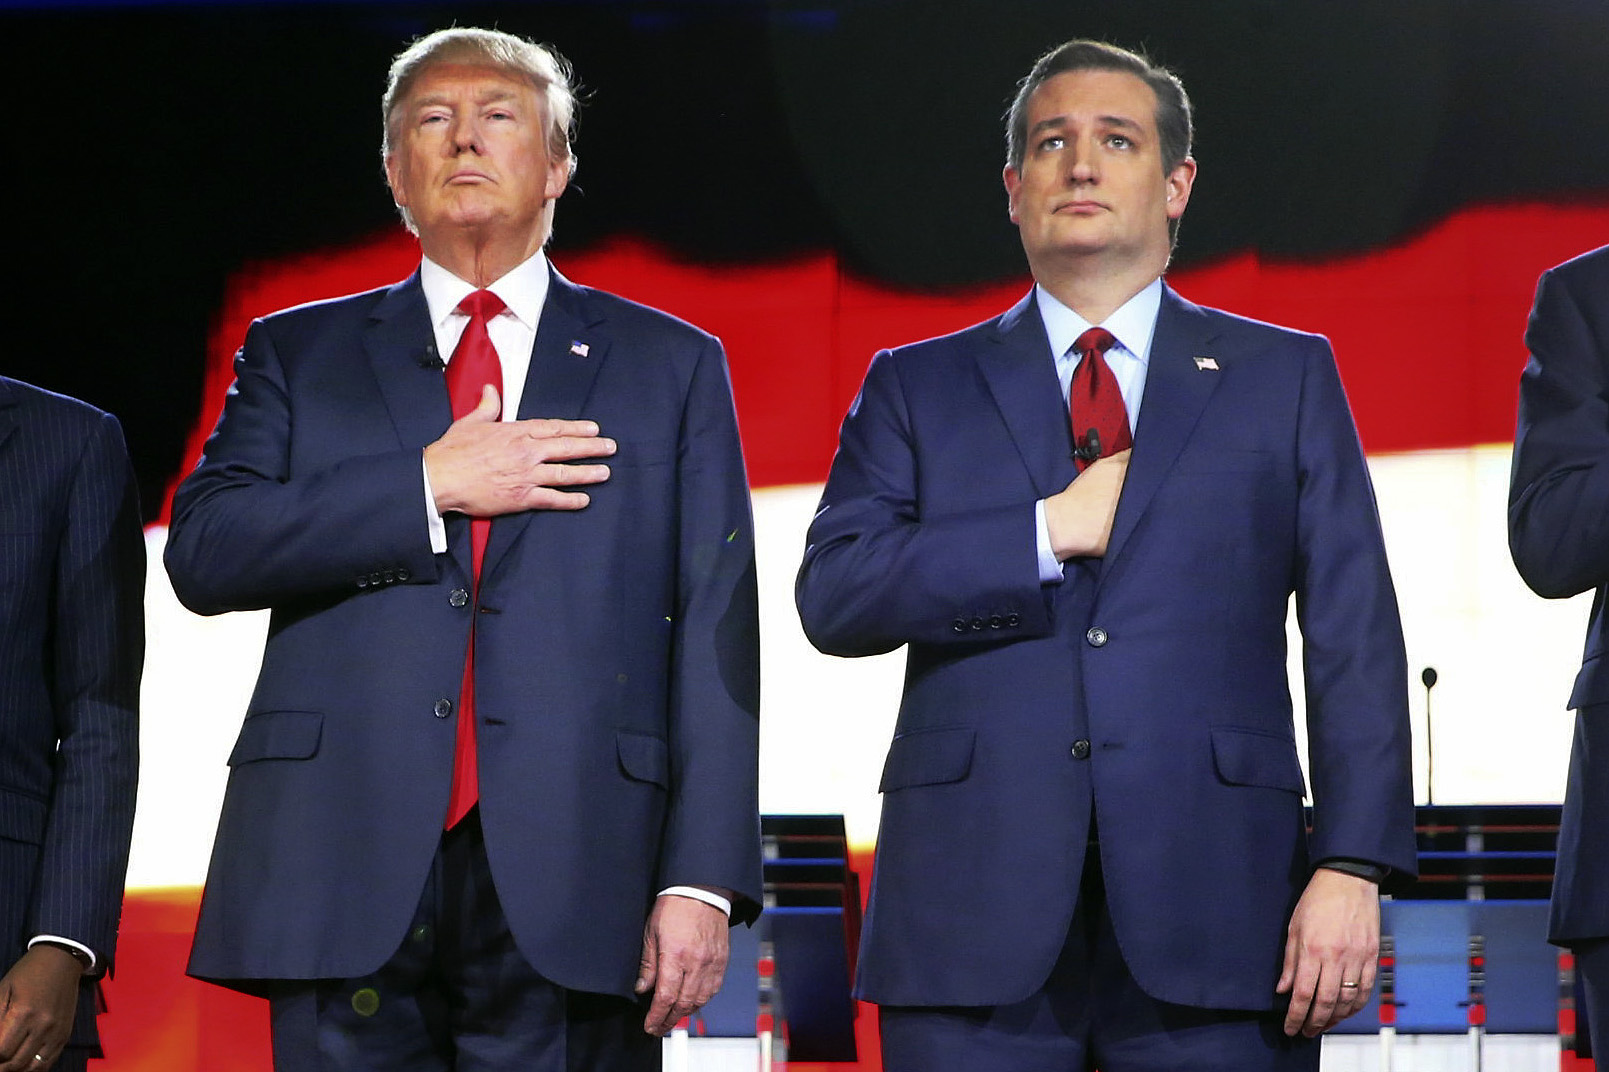 Republican presidential candidates Donald Trump and Texas Sen. Ted Cruz stand during a Republican presidential debate in Las Vegas in December.